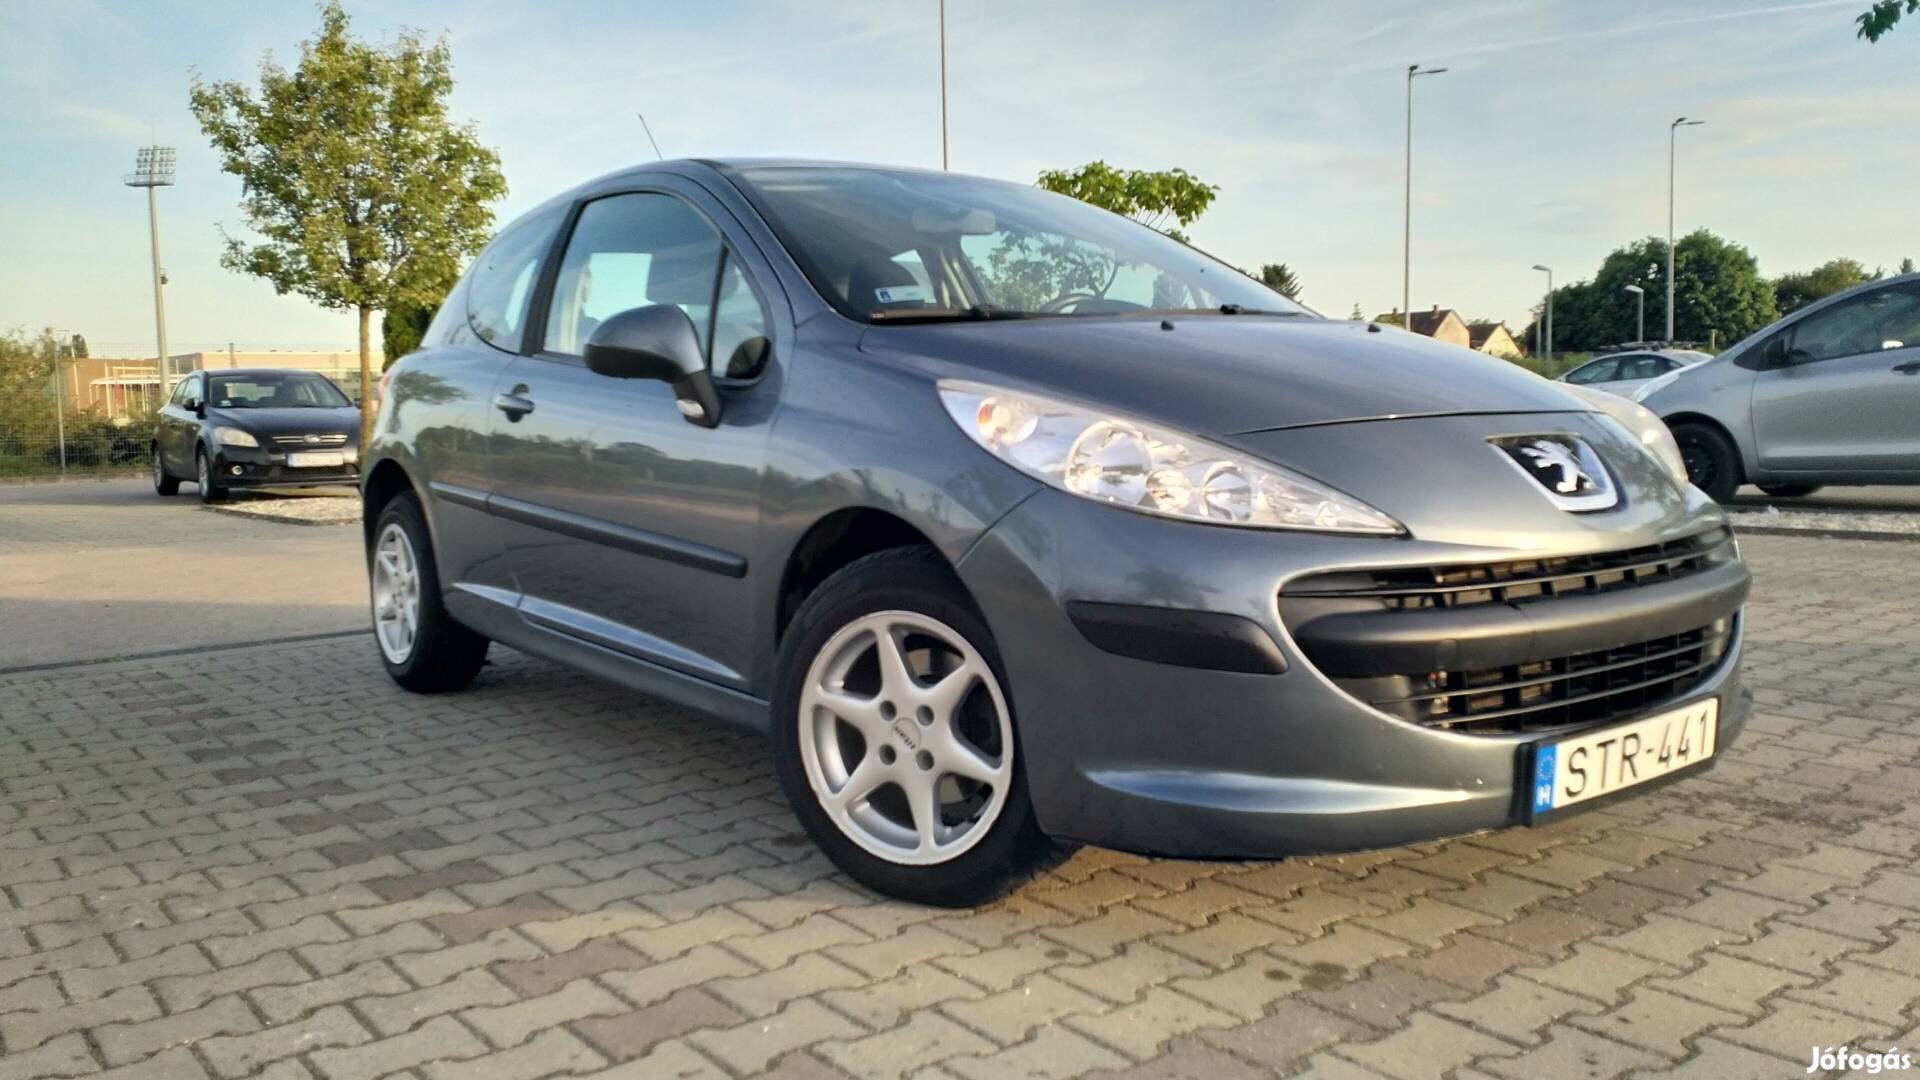 Peugeot 207. 1.4 benzin új gumik,26.03. vizsga